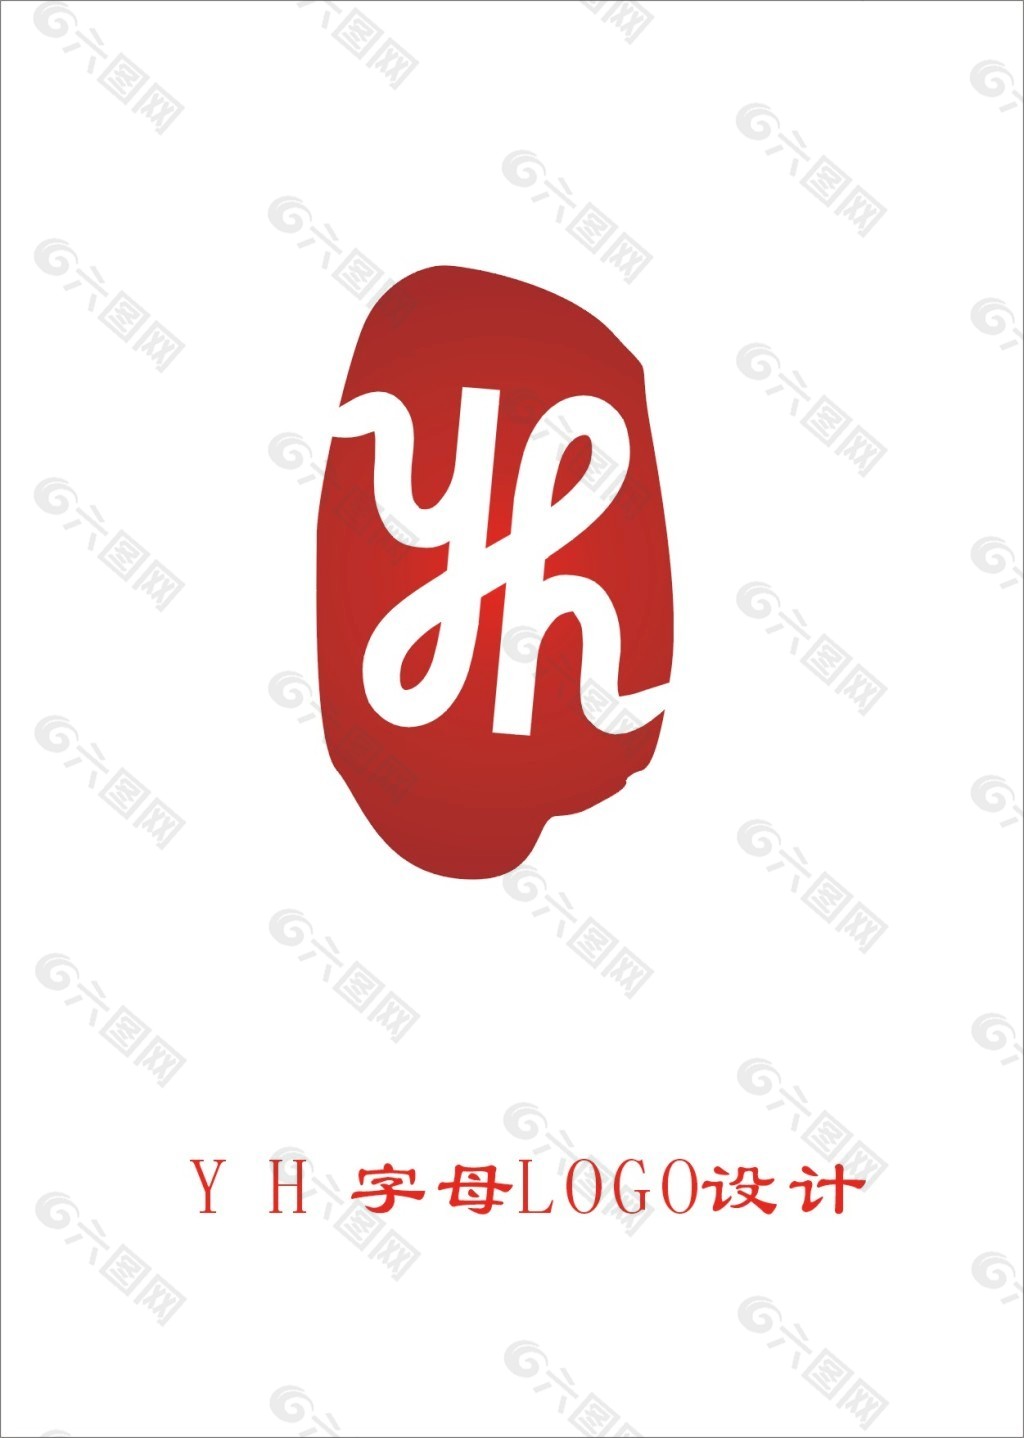 y h 字母logo设计平面广告素材免费下载(图片编号:5141934)